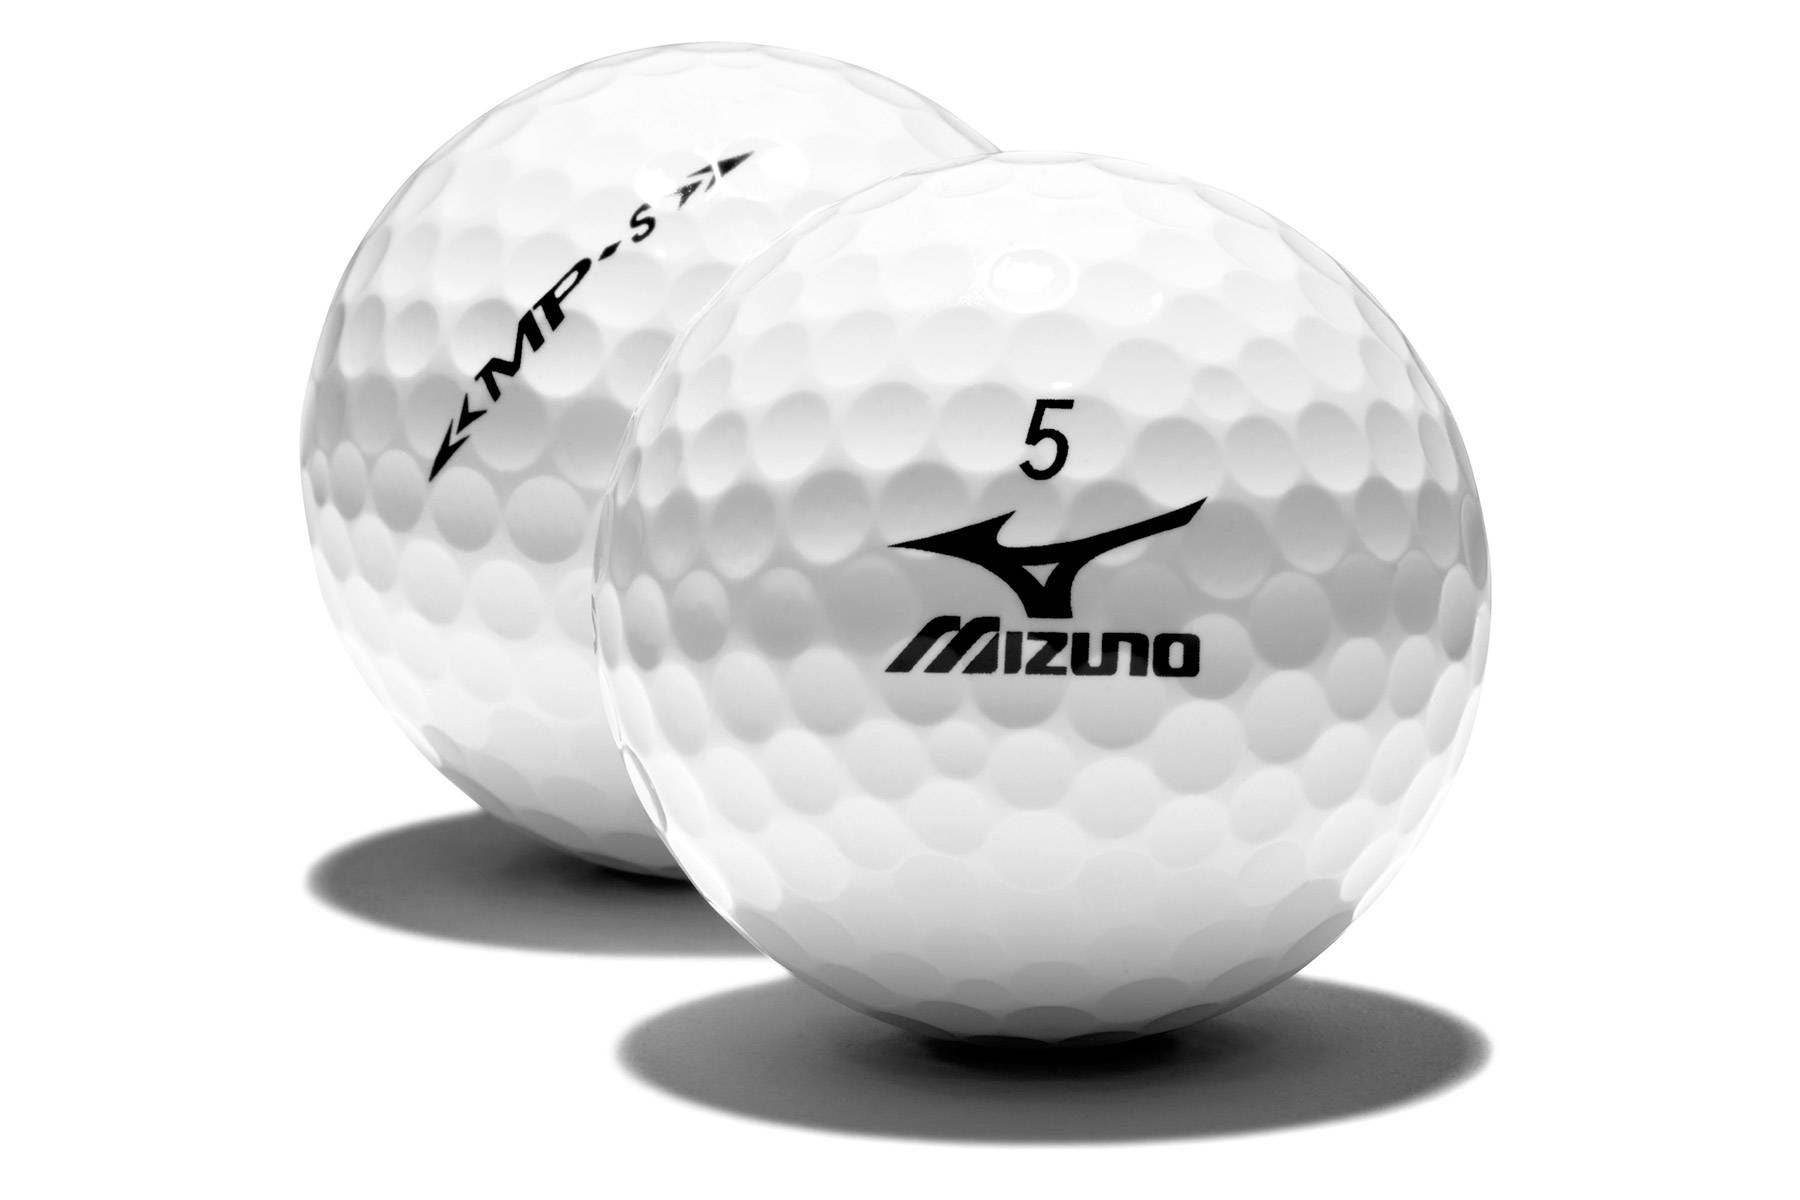 Что означают цифры на мячах для гольфа?